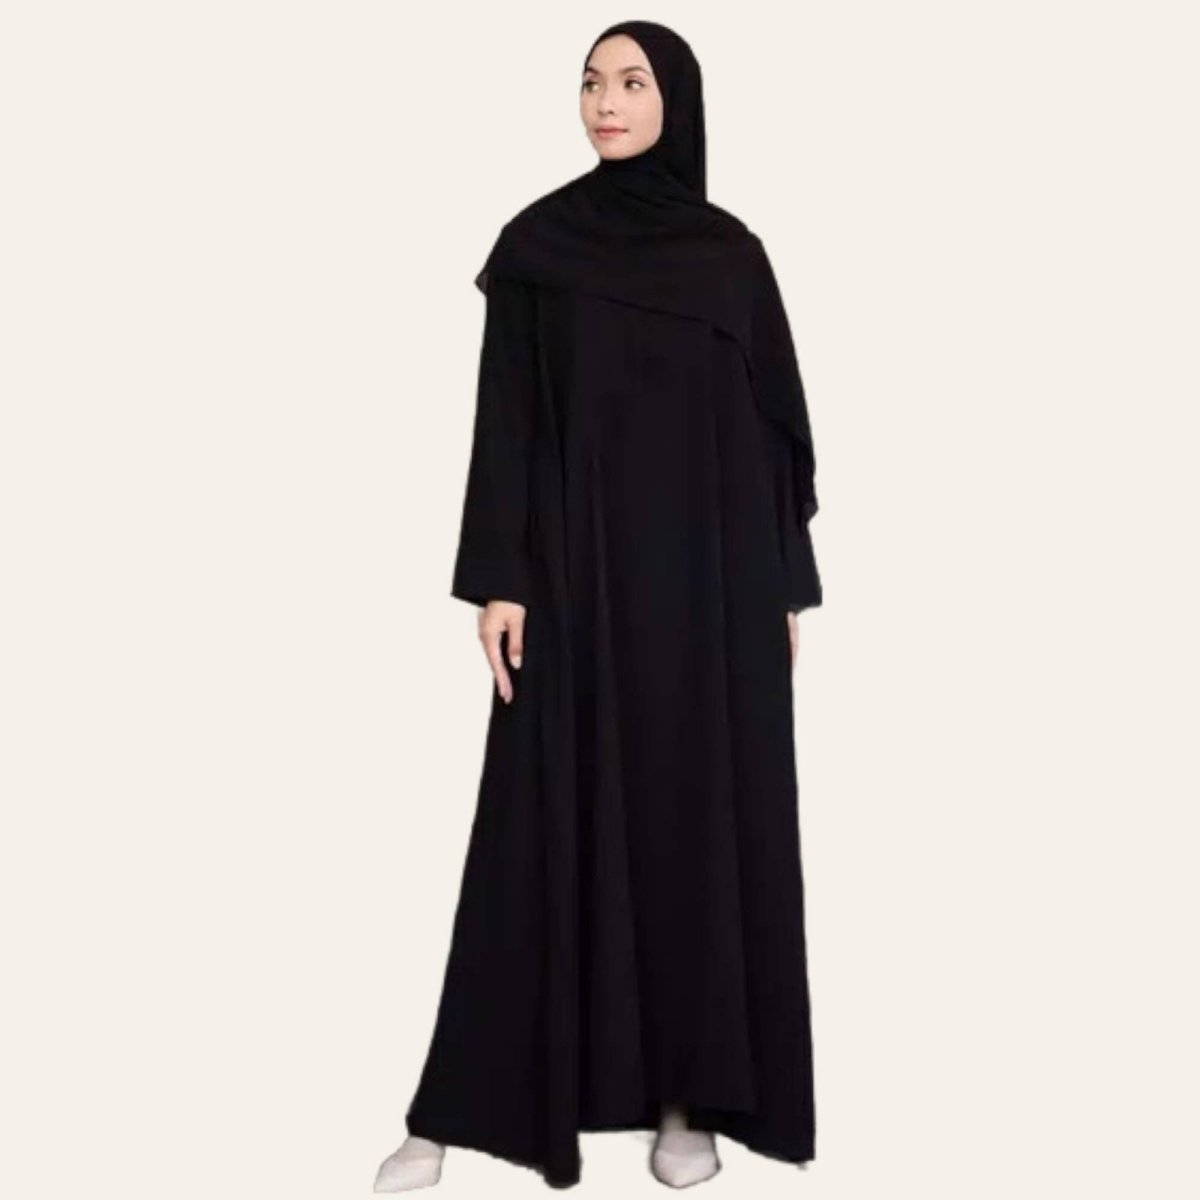 Black Turkish Abaya Muslim Dress for Women